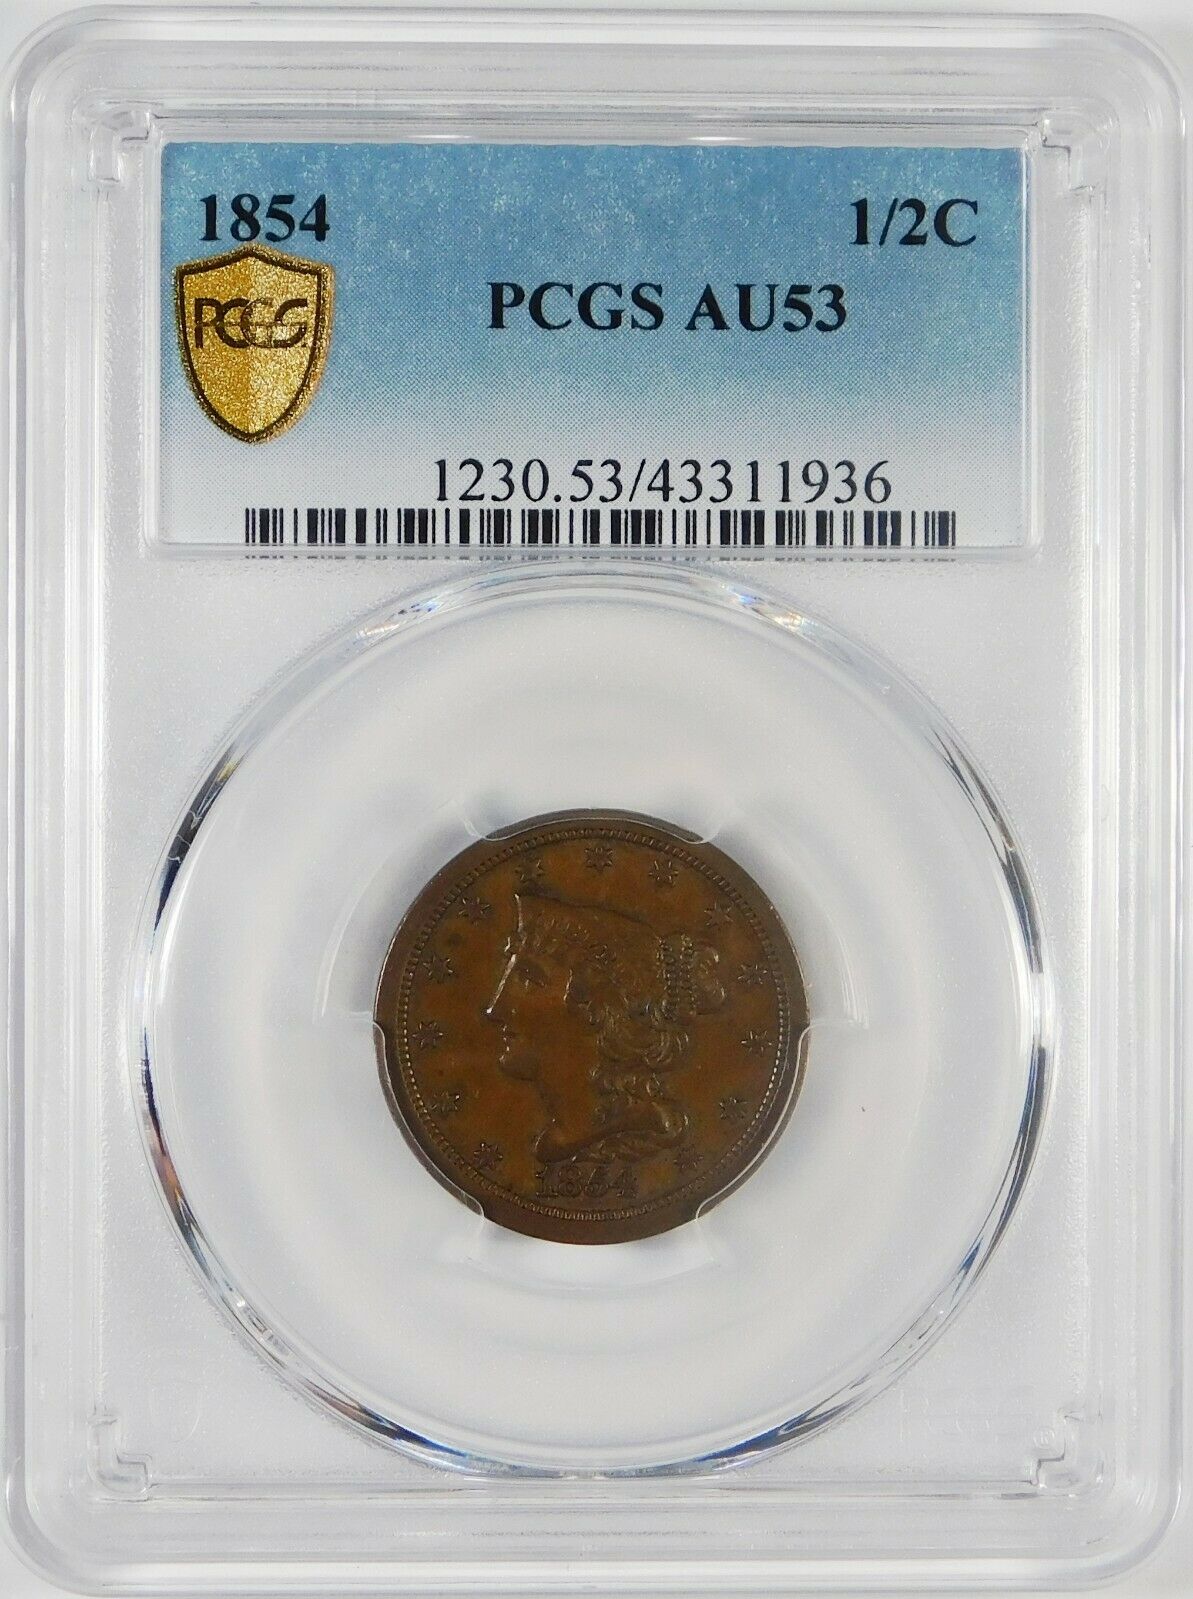 1854 1/2 Braided Hair Half Cent Pcgs Au53